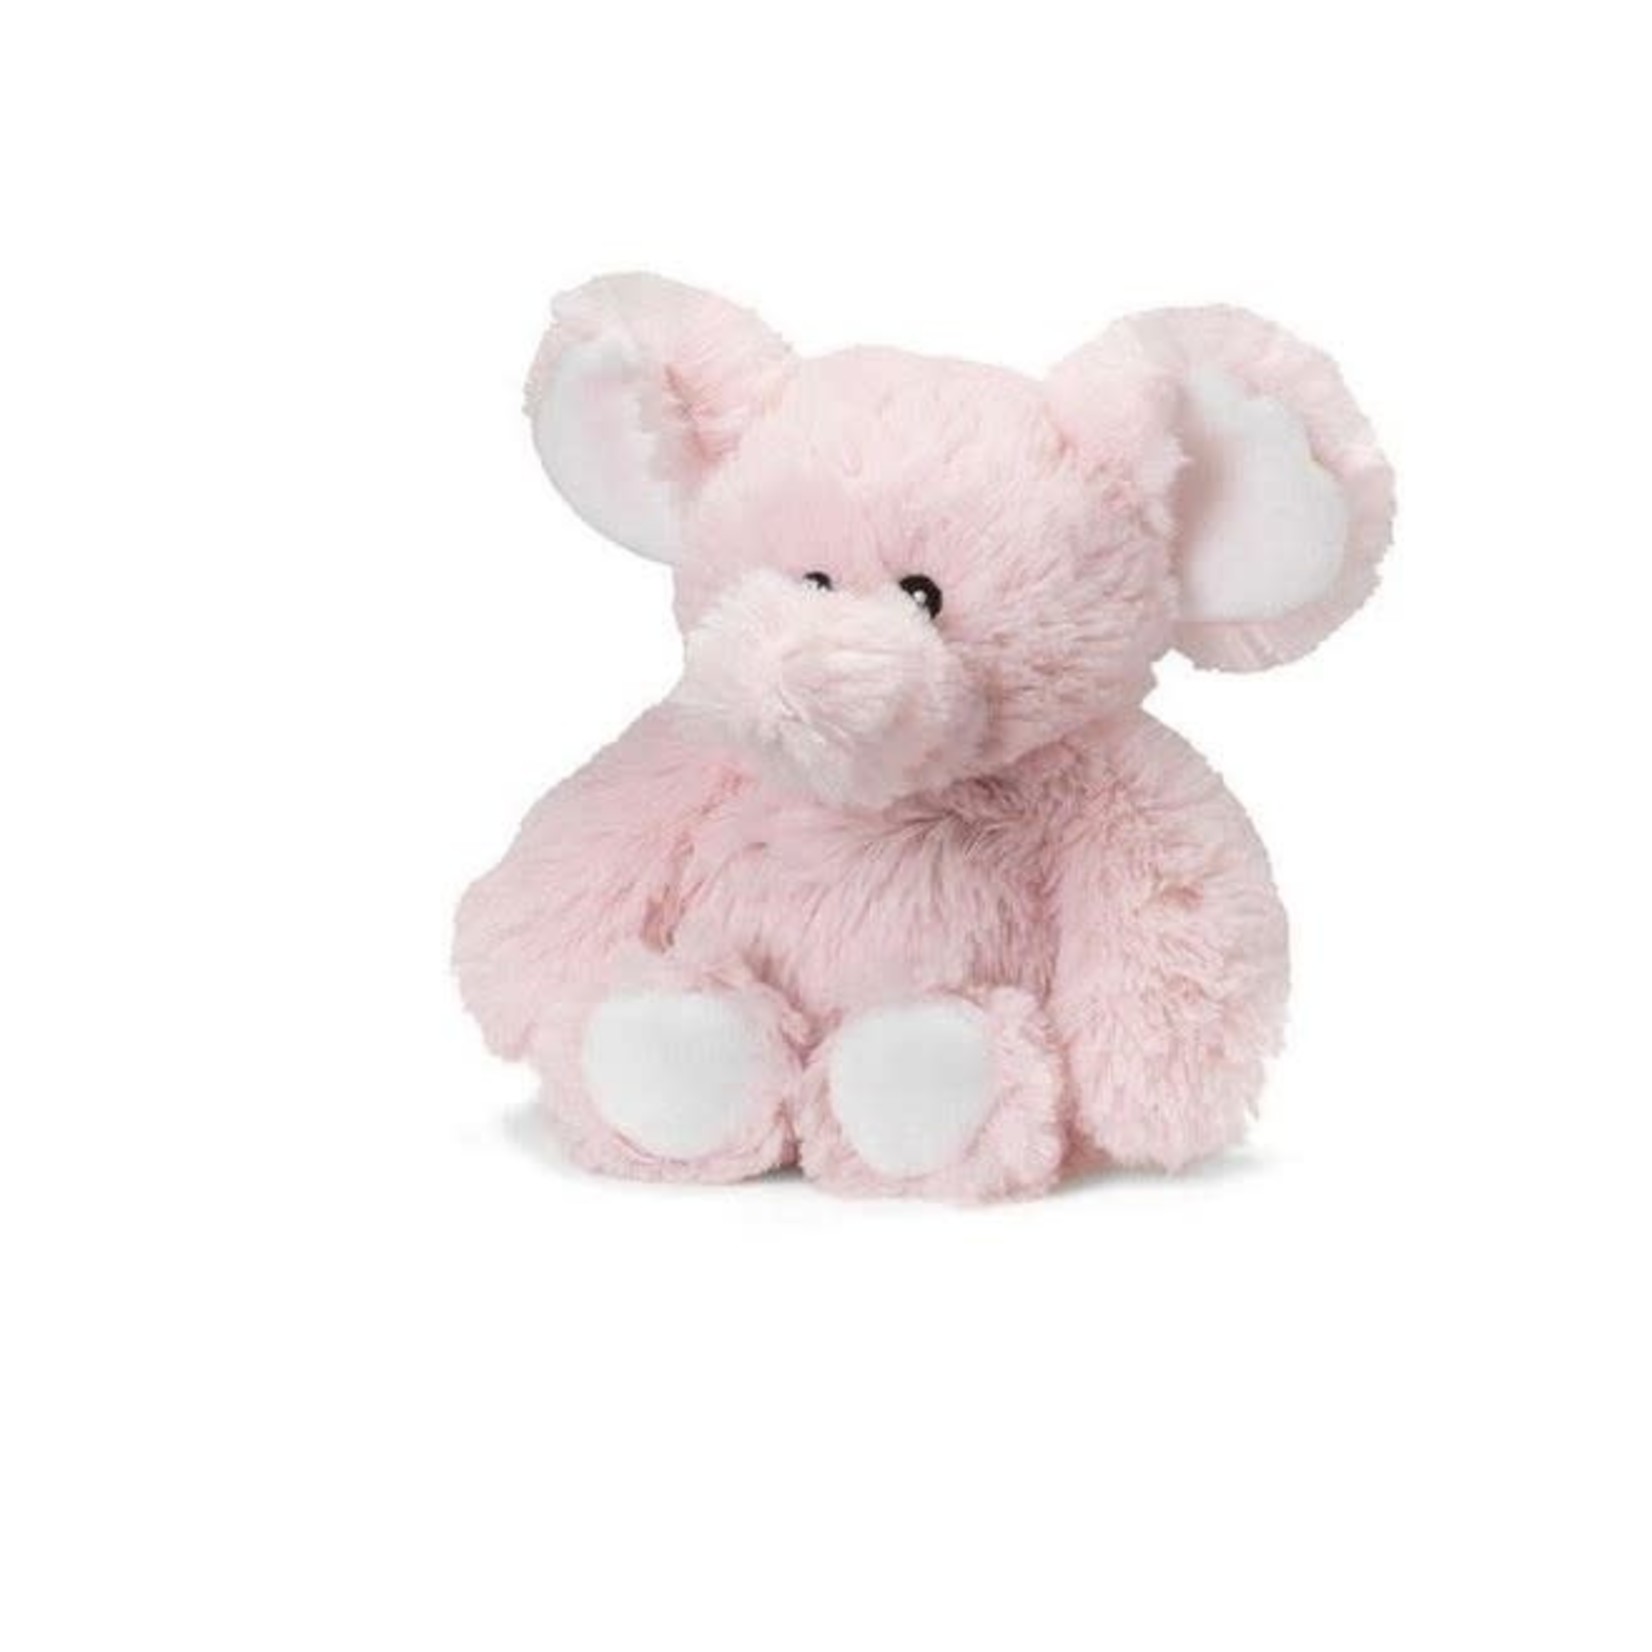 Intelex Warmies Junior Elephant Pink Cozy Plush